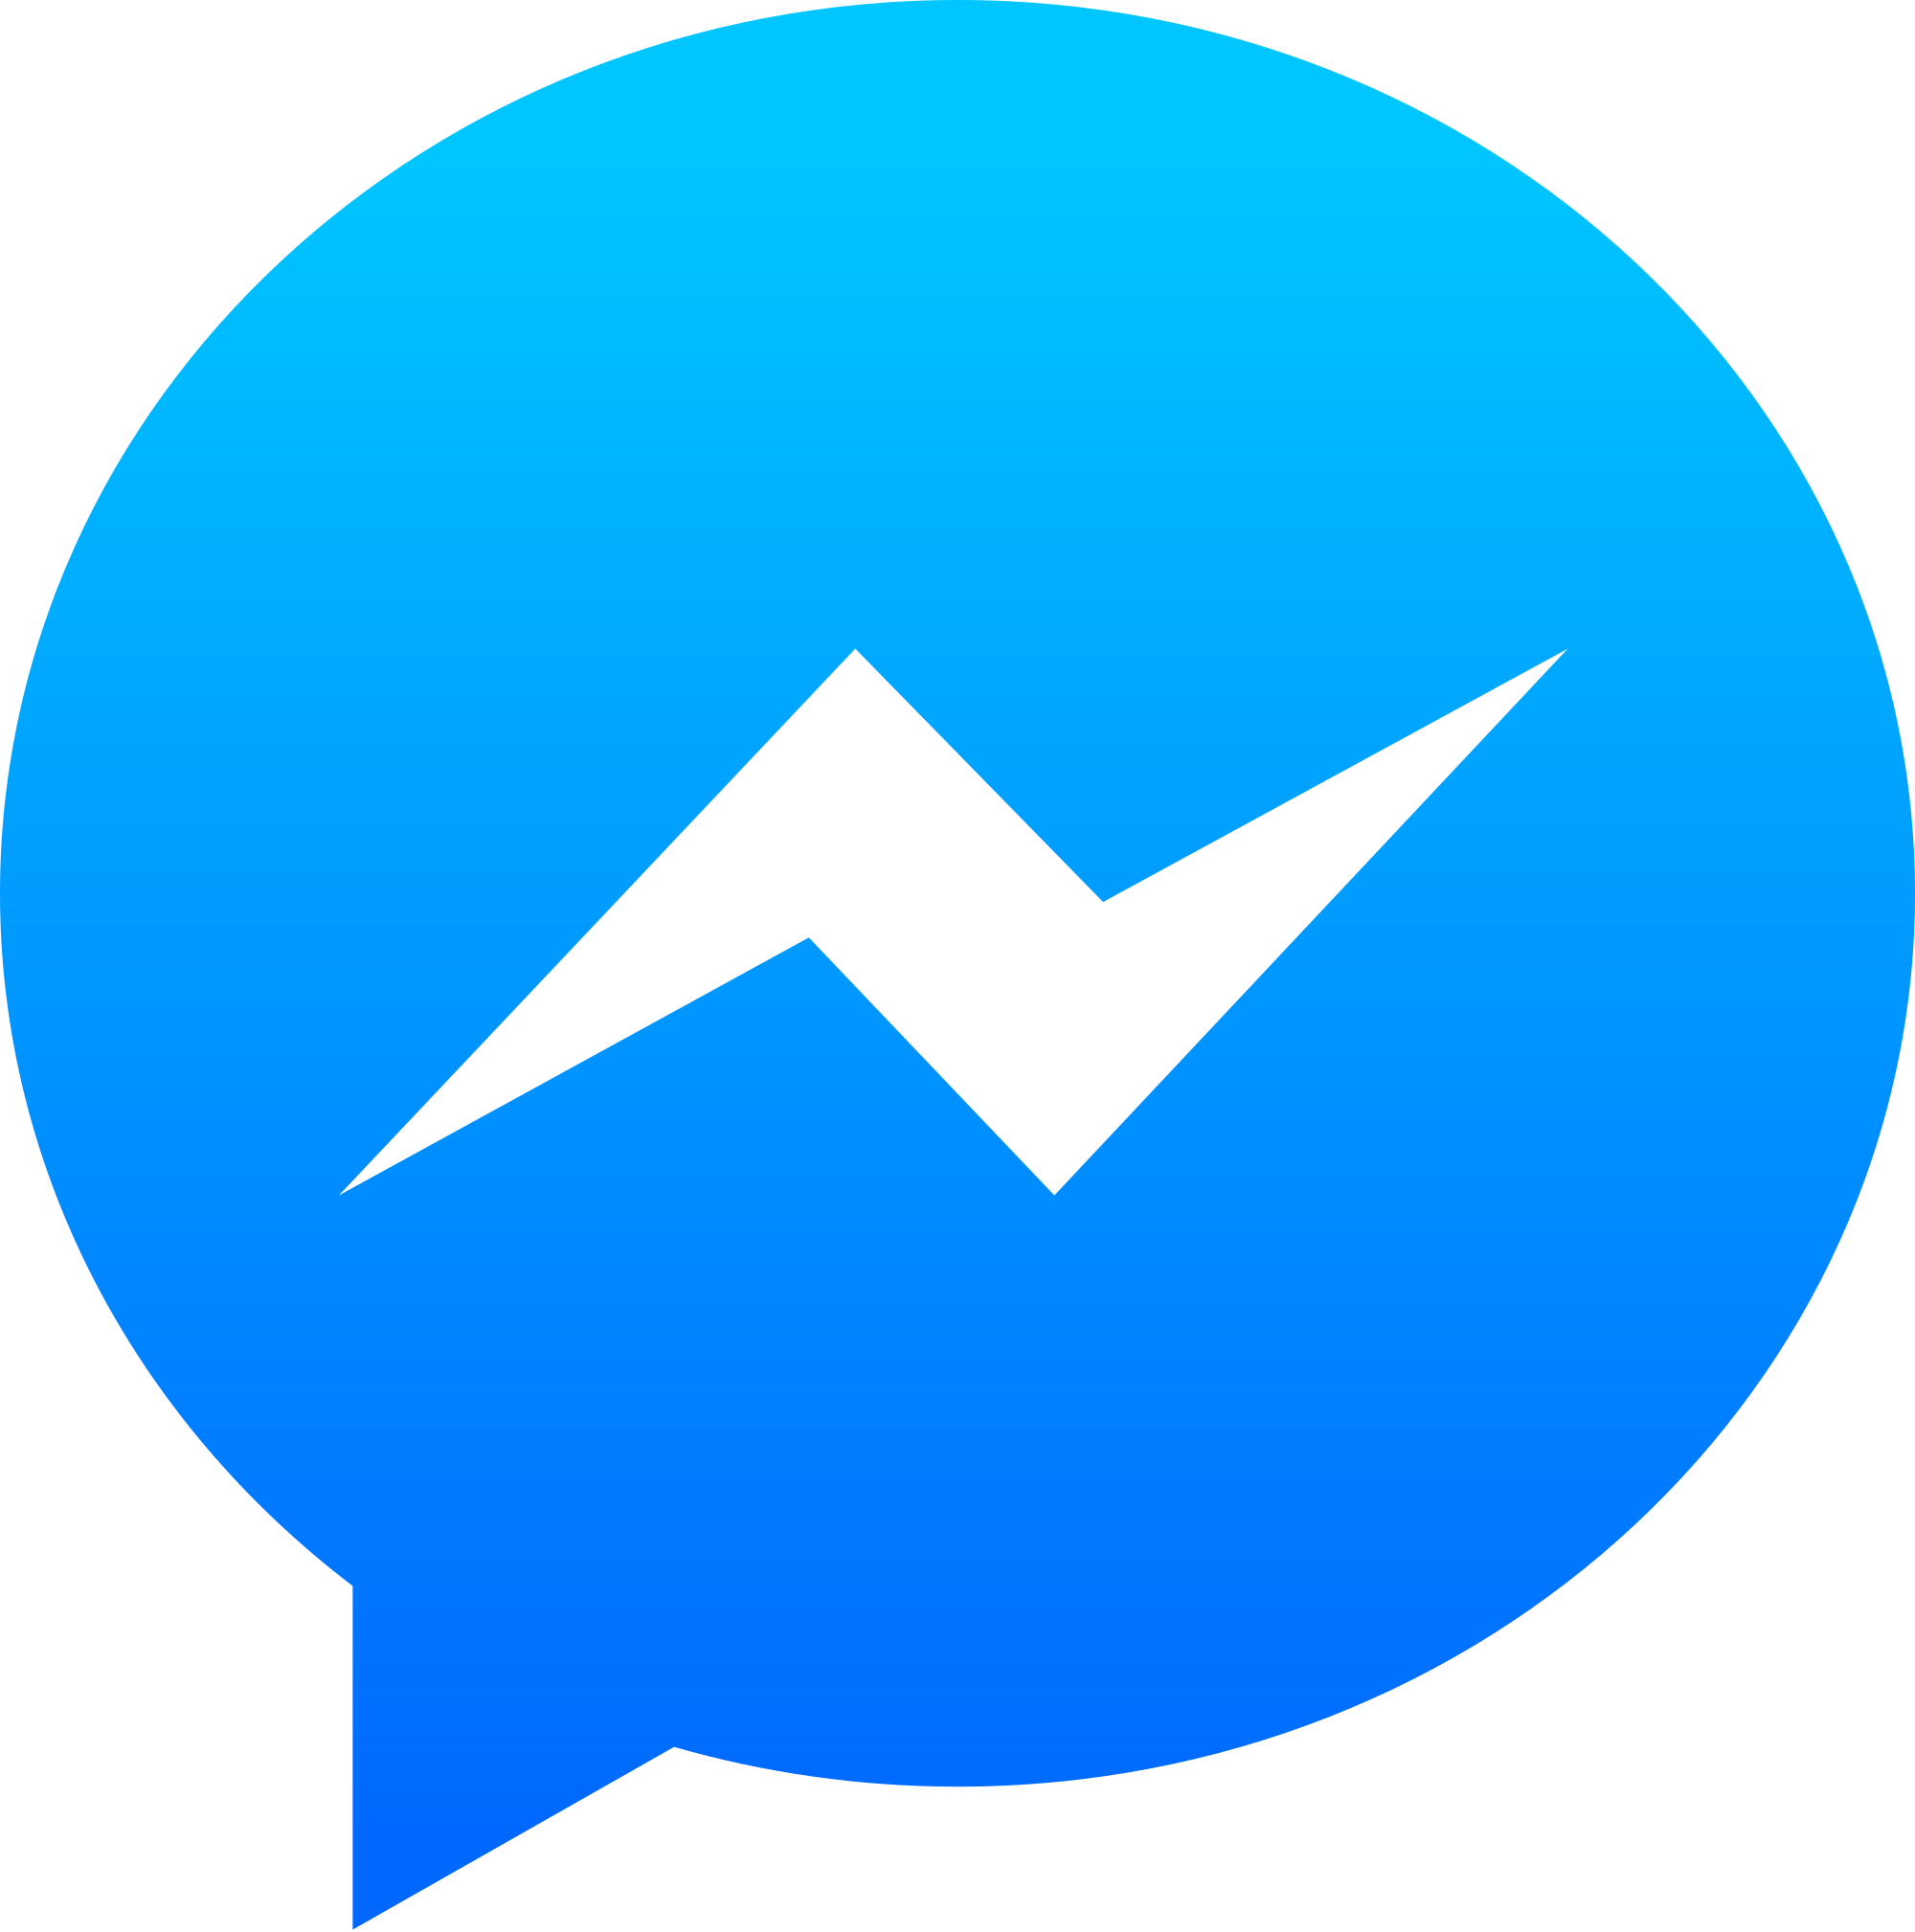 Blue Circle Facebook Logo - Facebook Messenger icons - What do Messenger icons mean?